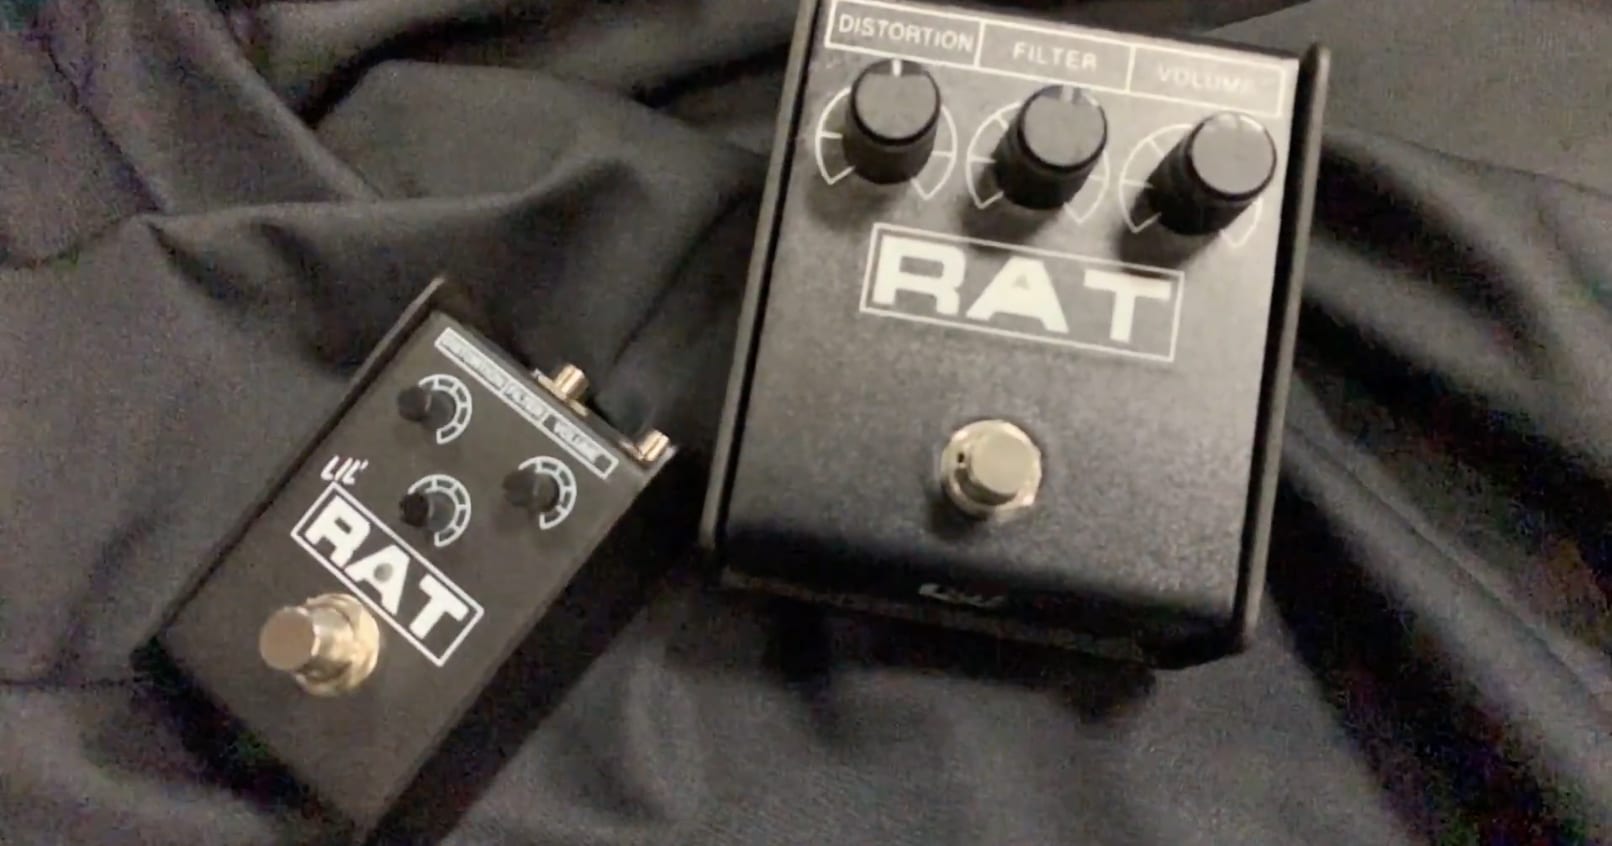 Lil Rat next to a Rat 2 pedal